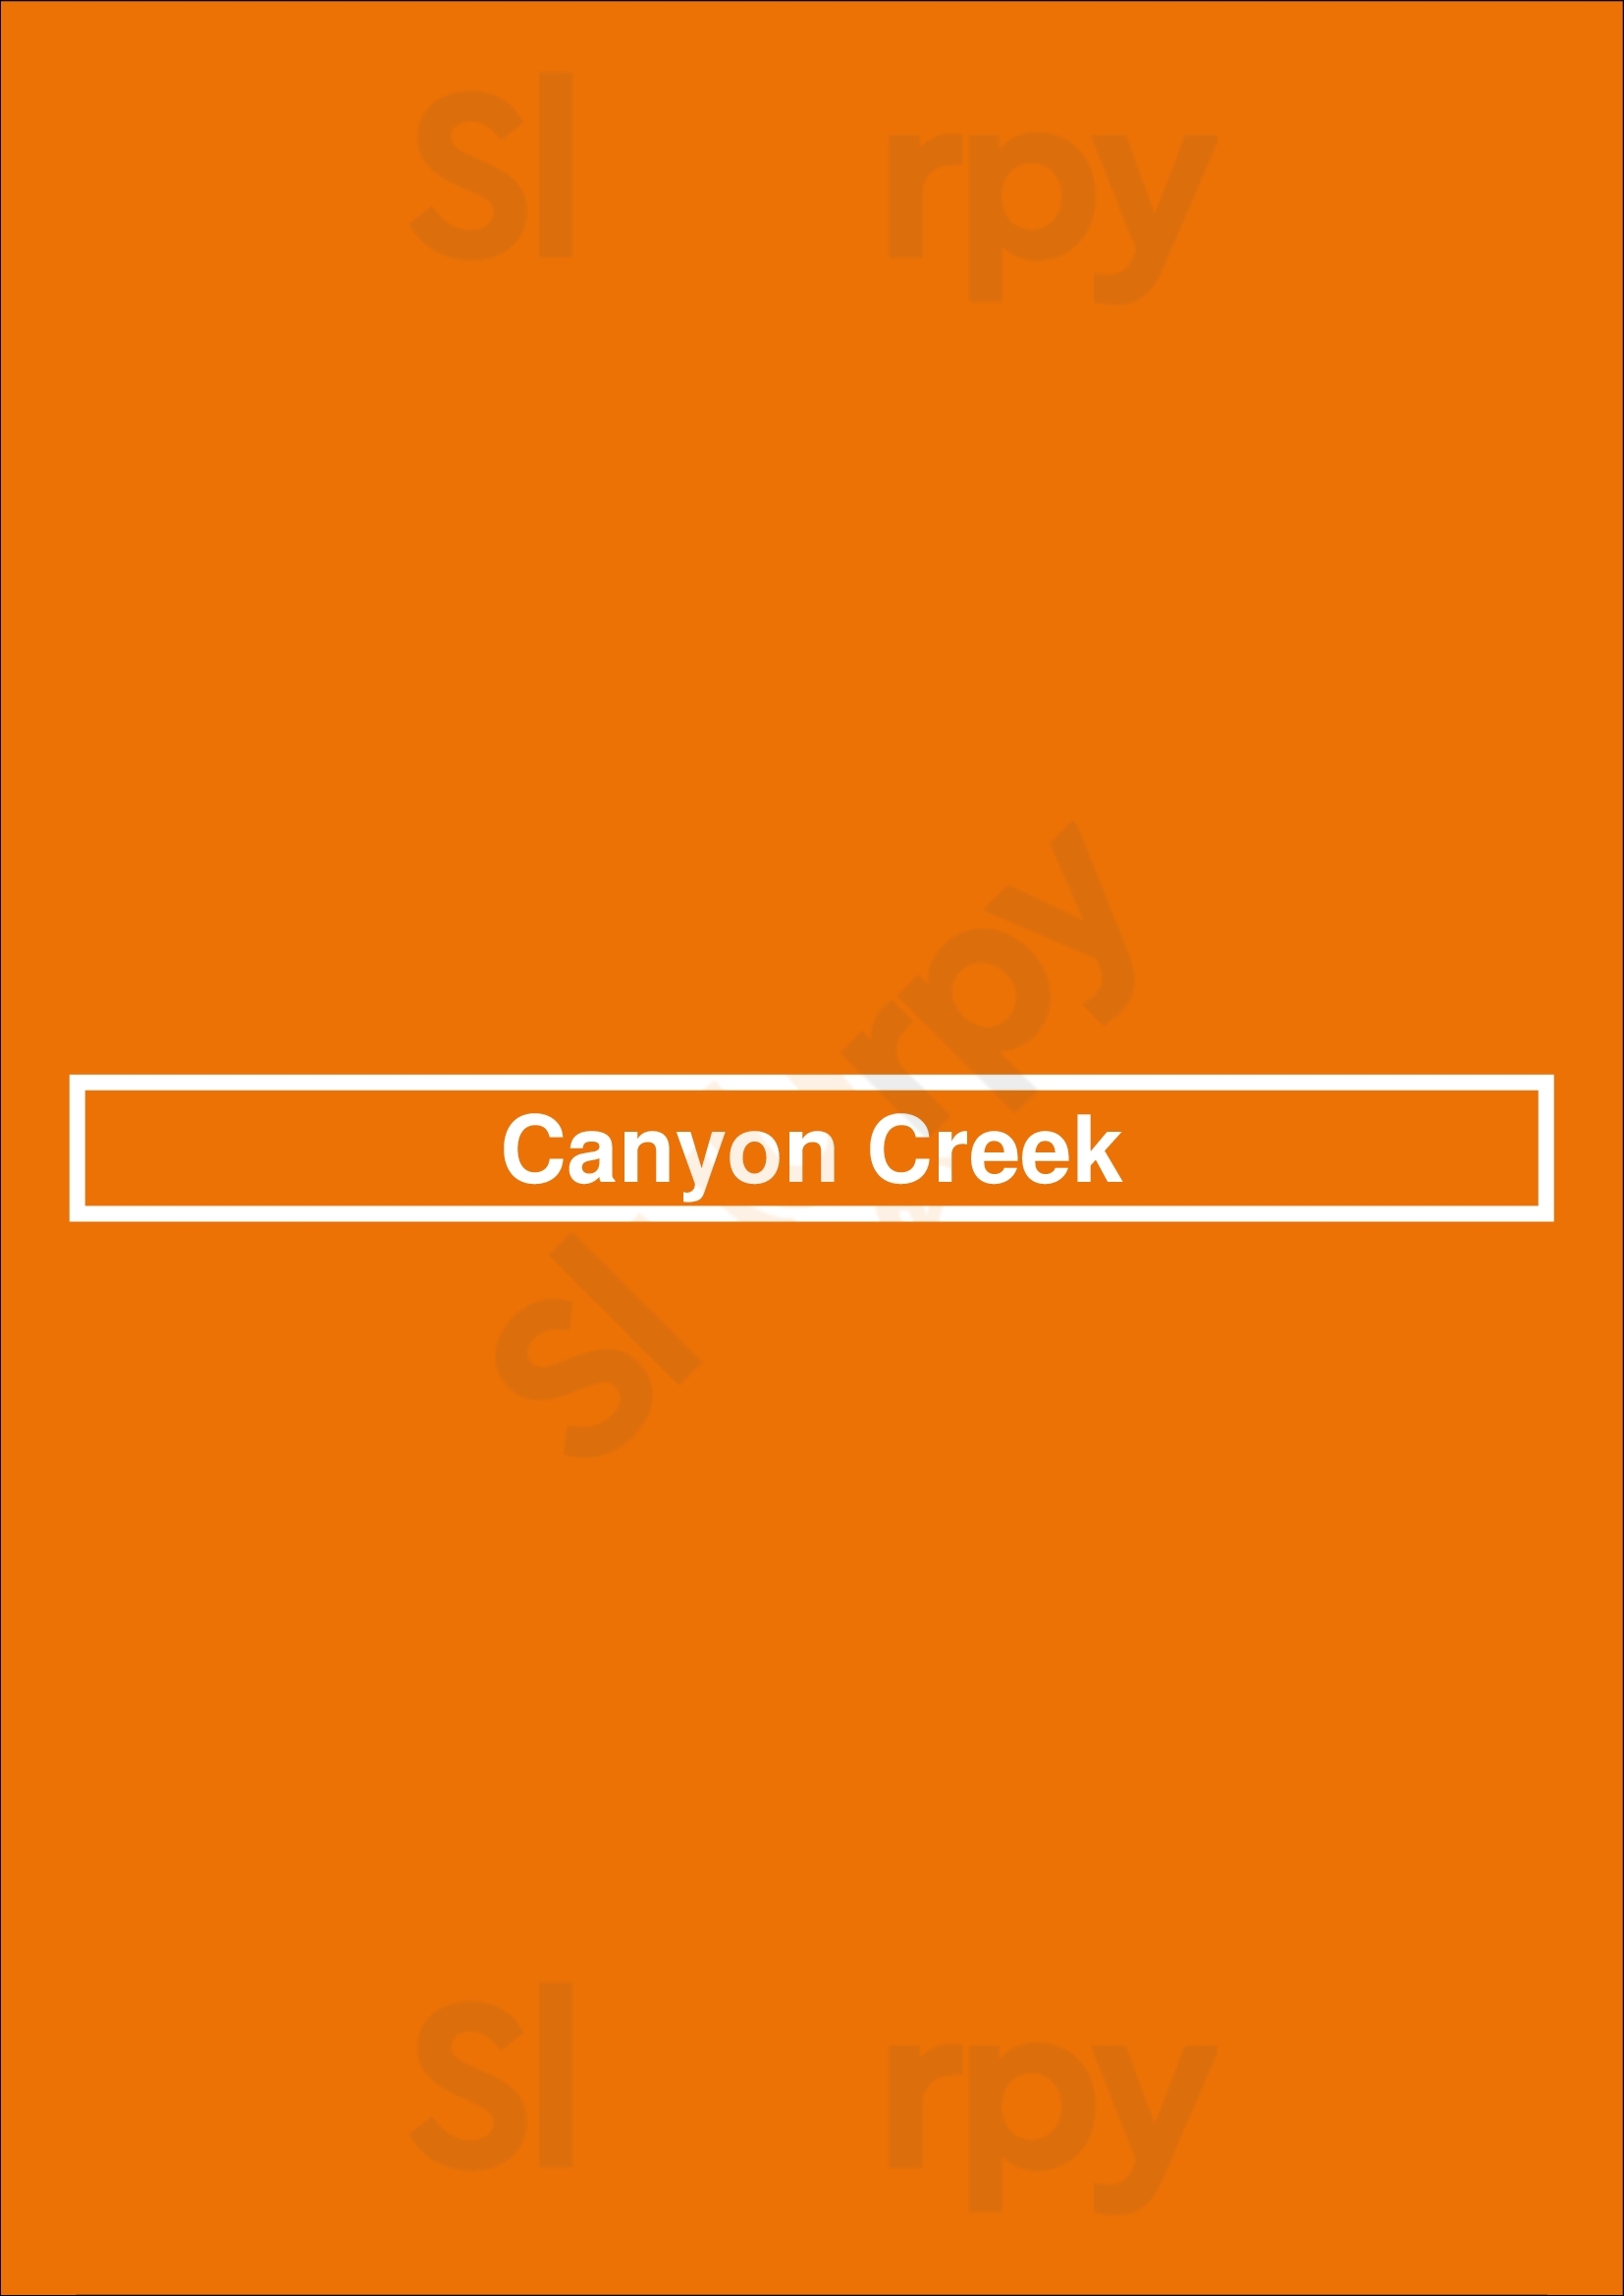 Canyon Creek Vaughan Menu - 1